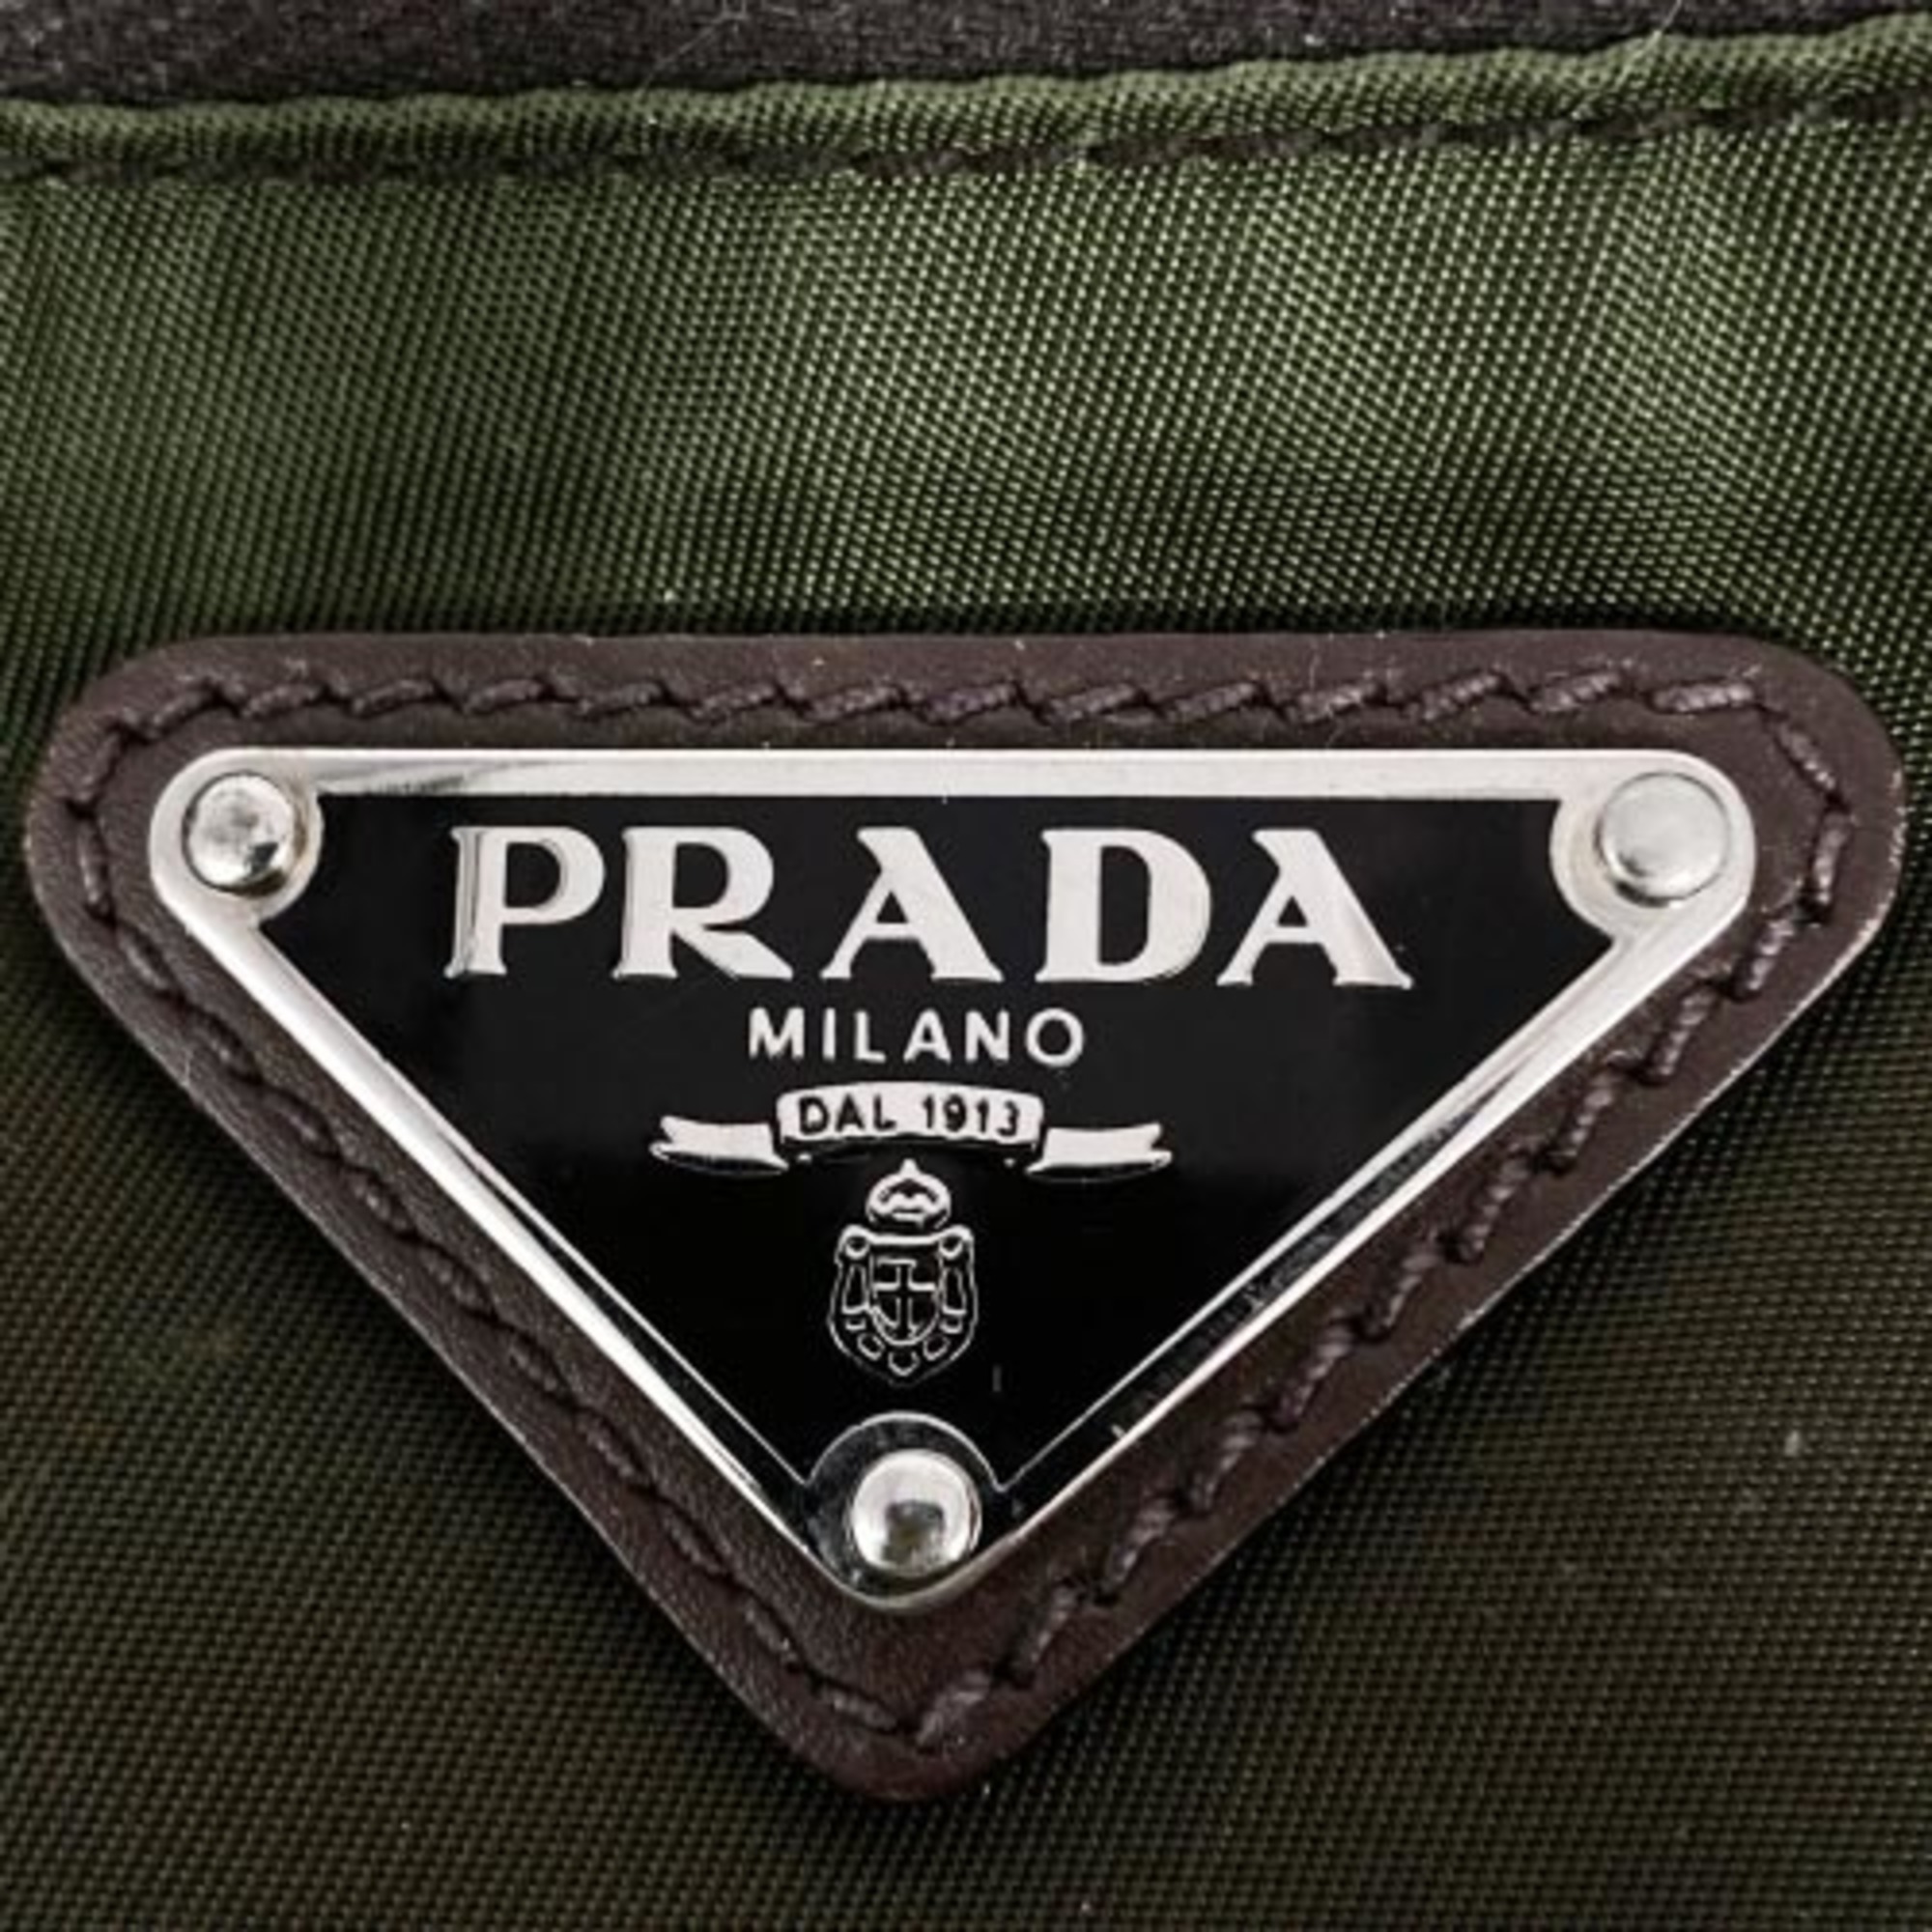 PRADA Prada tote bag nylon triangle khaki ladies men's fashion ITY4FRMO6ABT